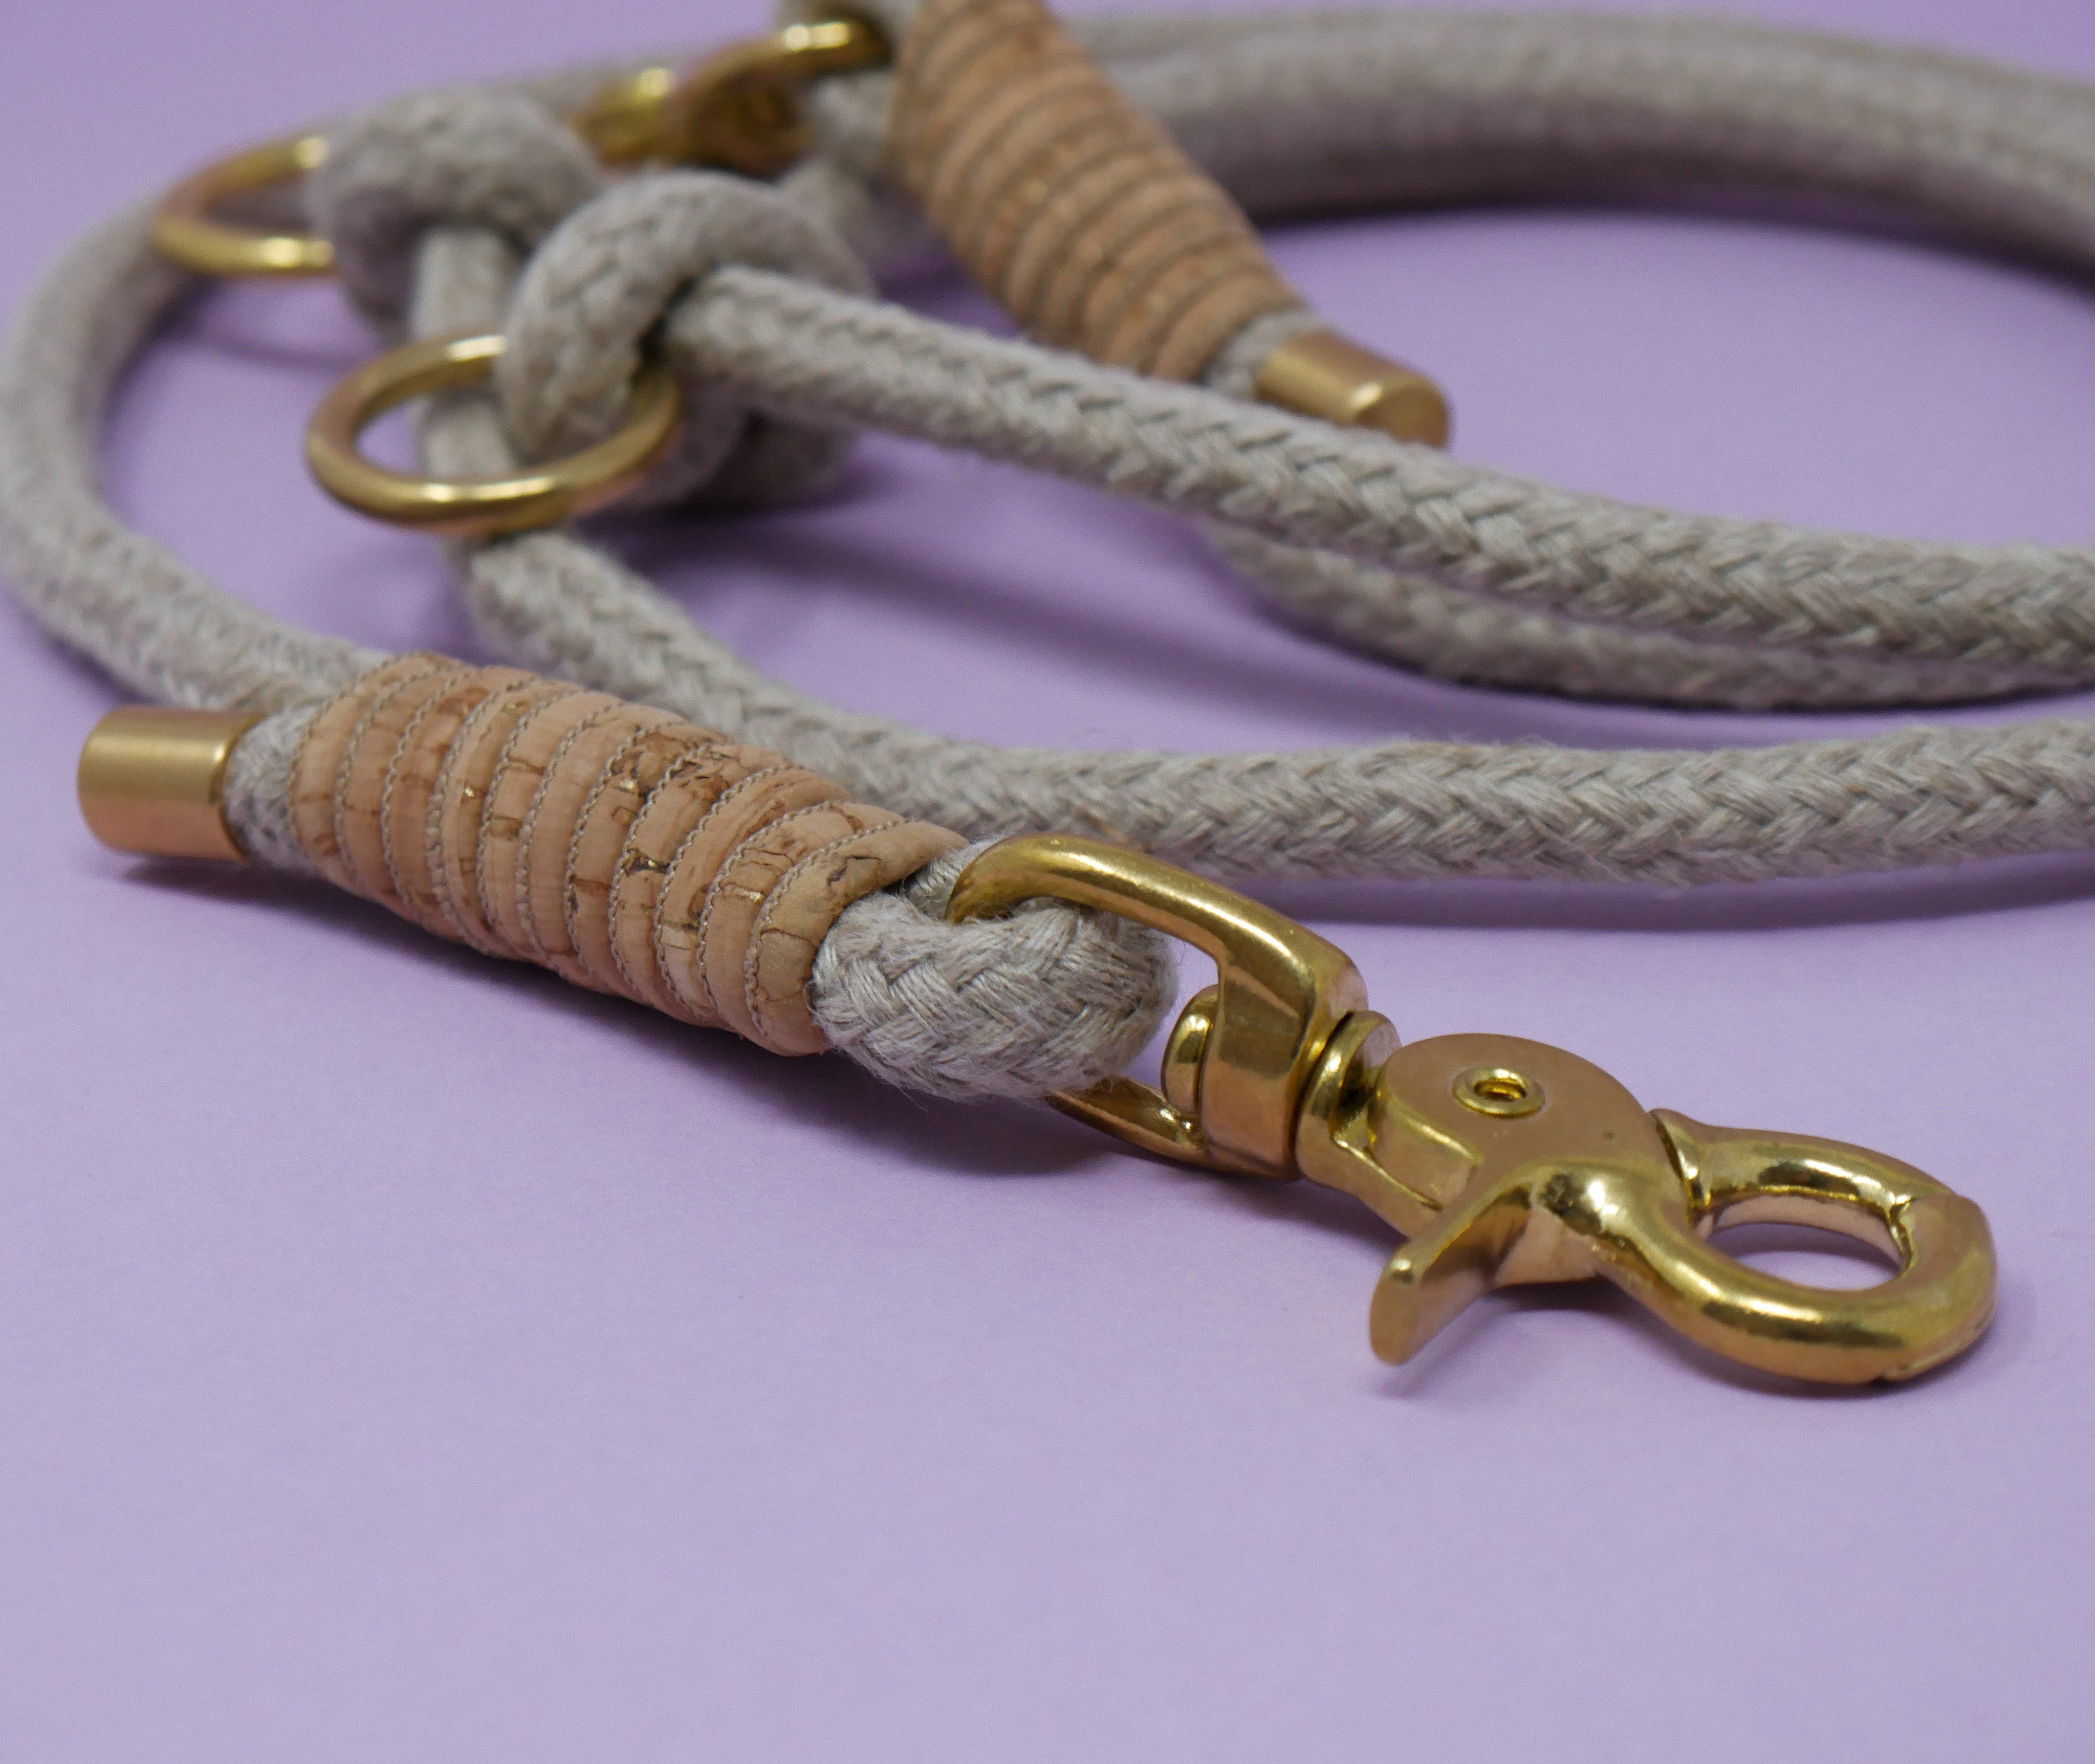 Rope Leash 'Sahara' - made of hemp rope